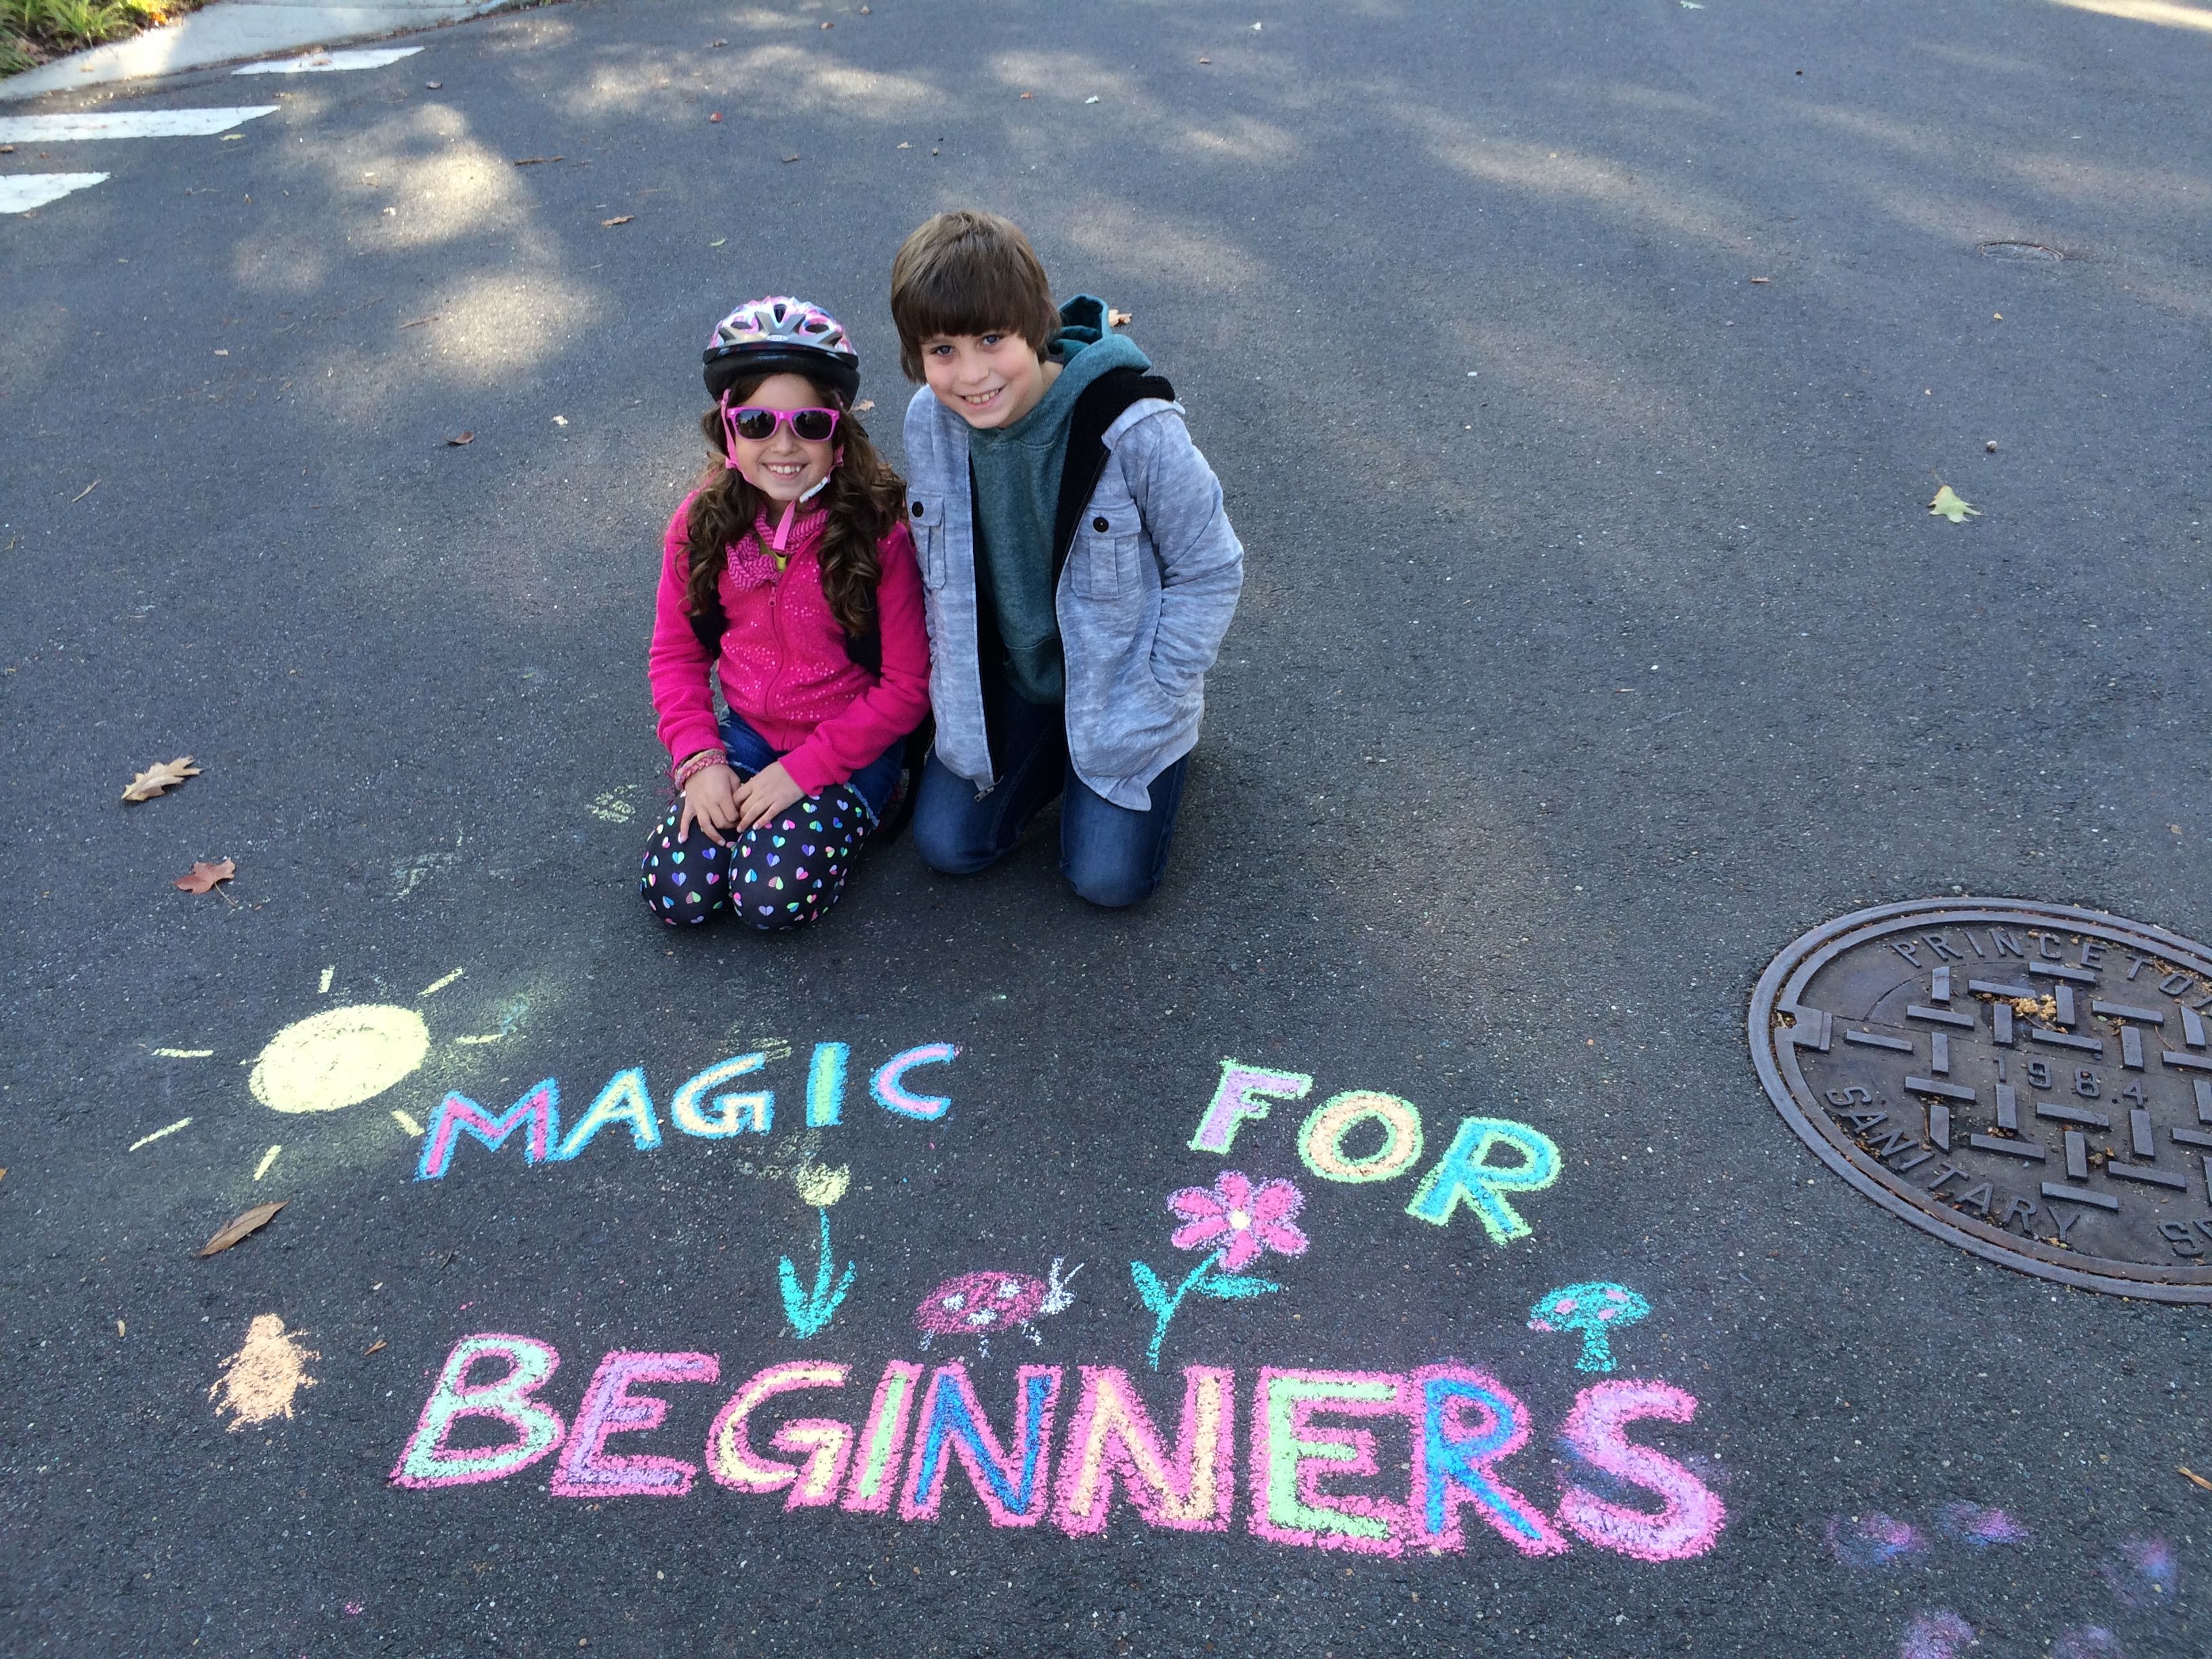 Joseph Ricci and Destiny Monet Cruz in Magic for Beginners (2014)